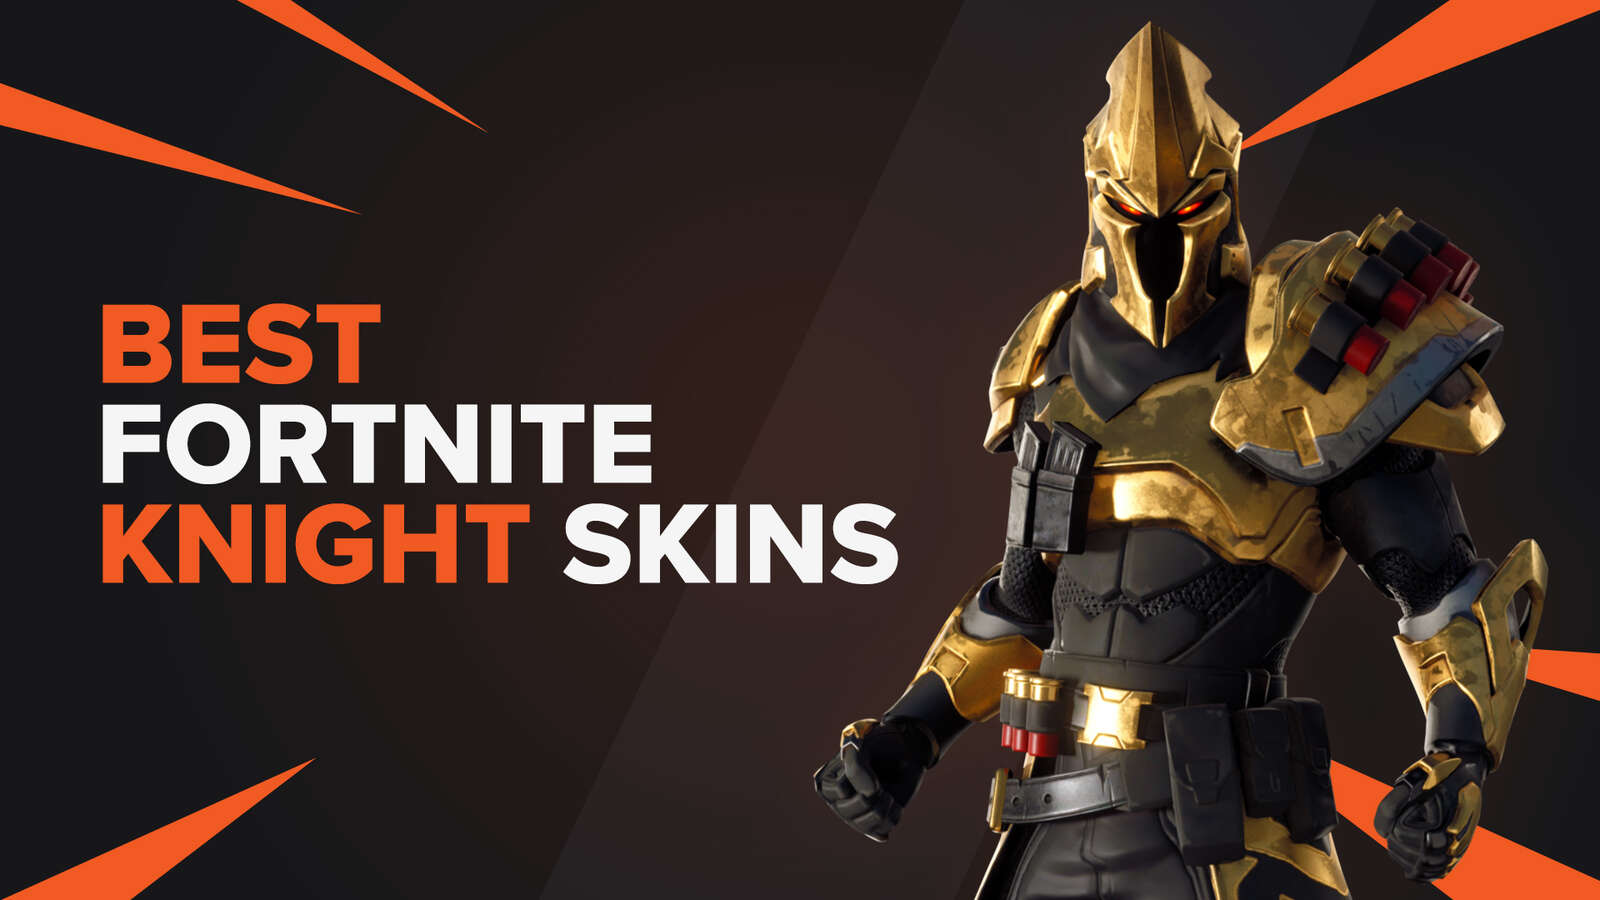 Best Fortnite Knight Skins